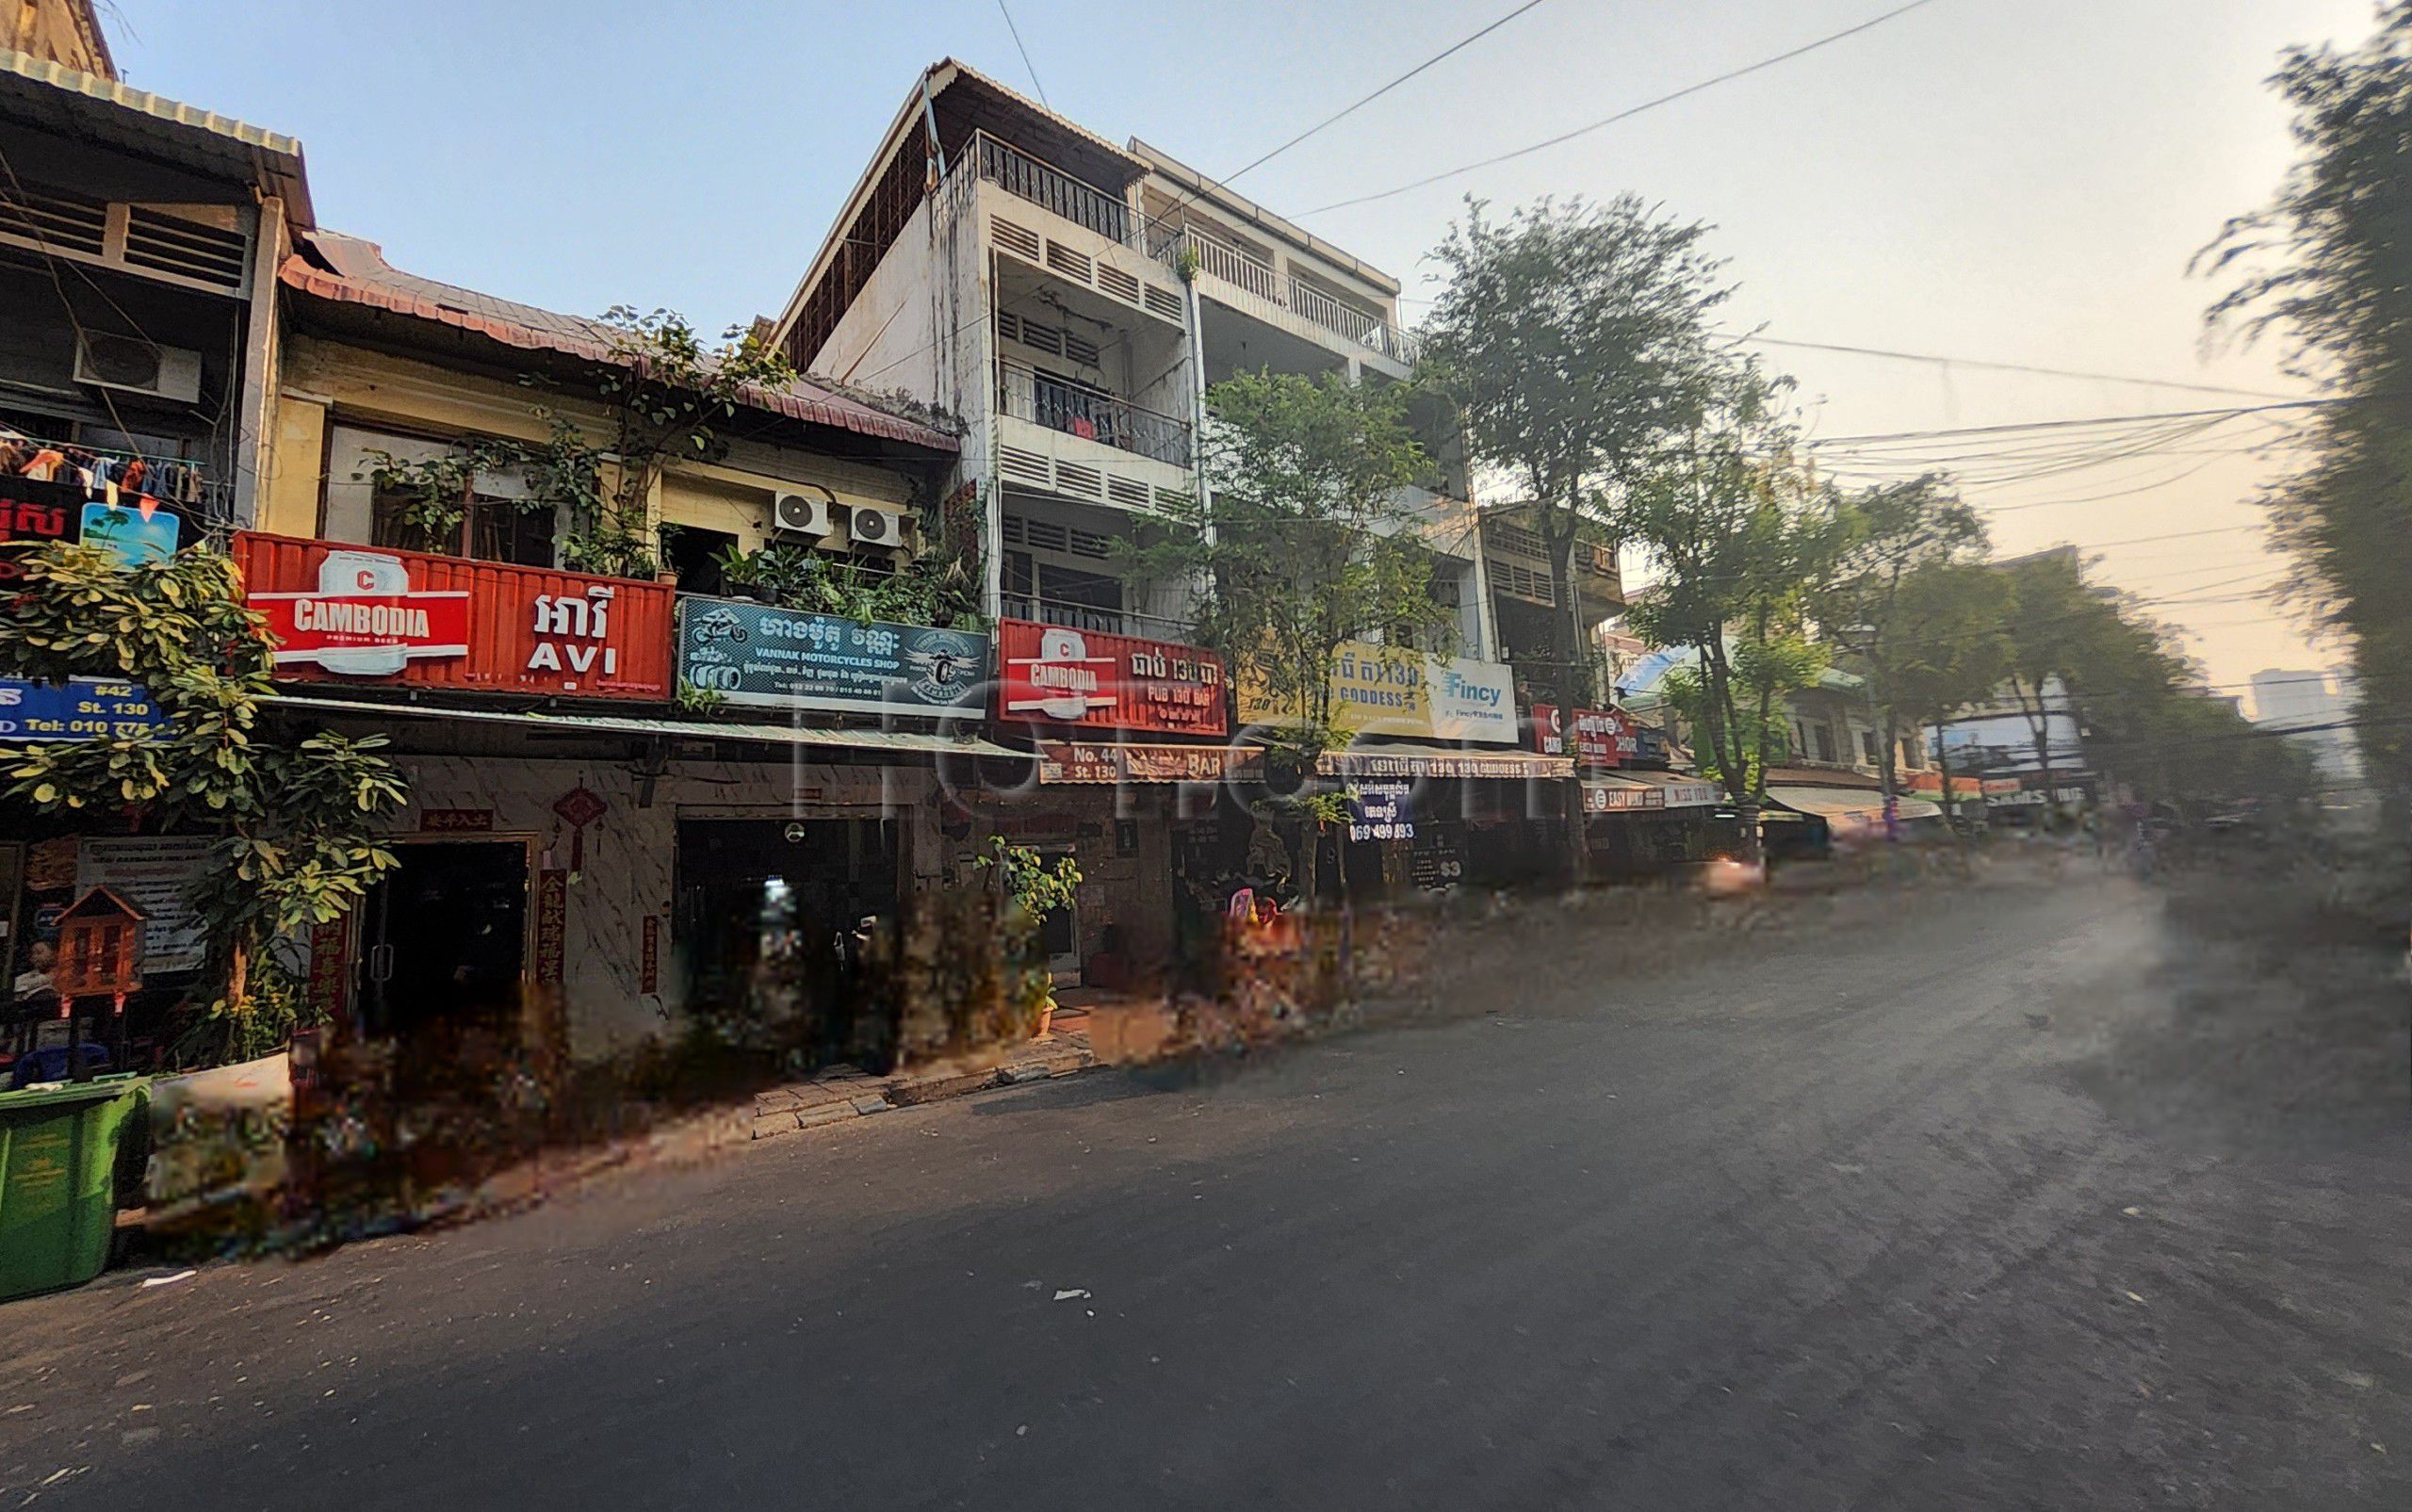 Phnom Penh, Cambodia Avi